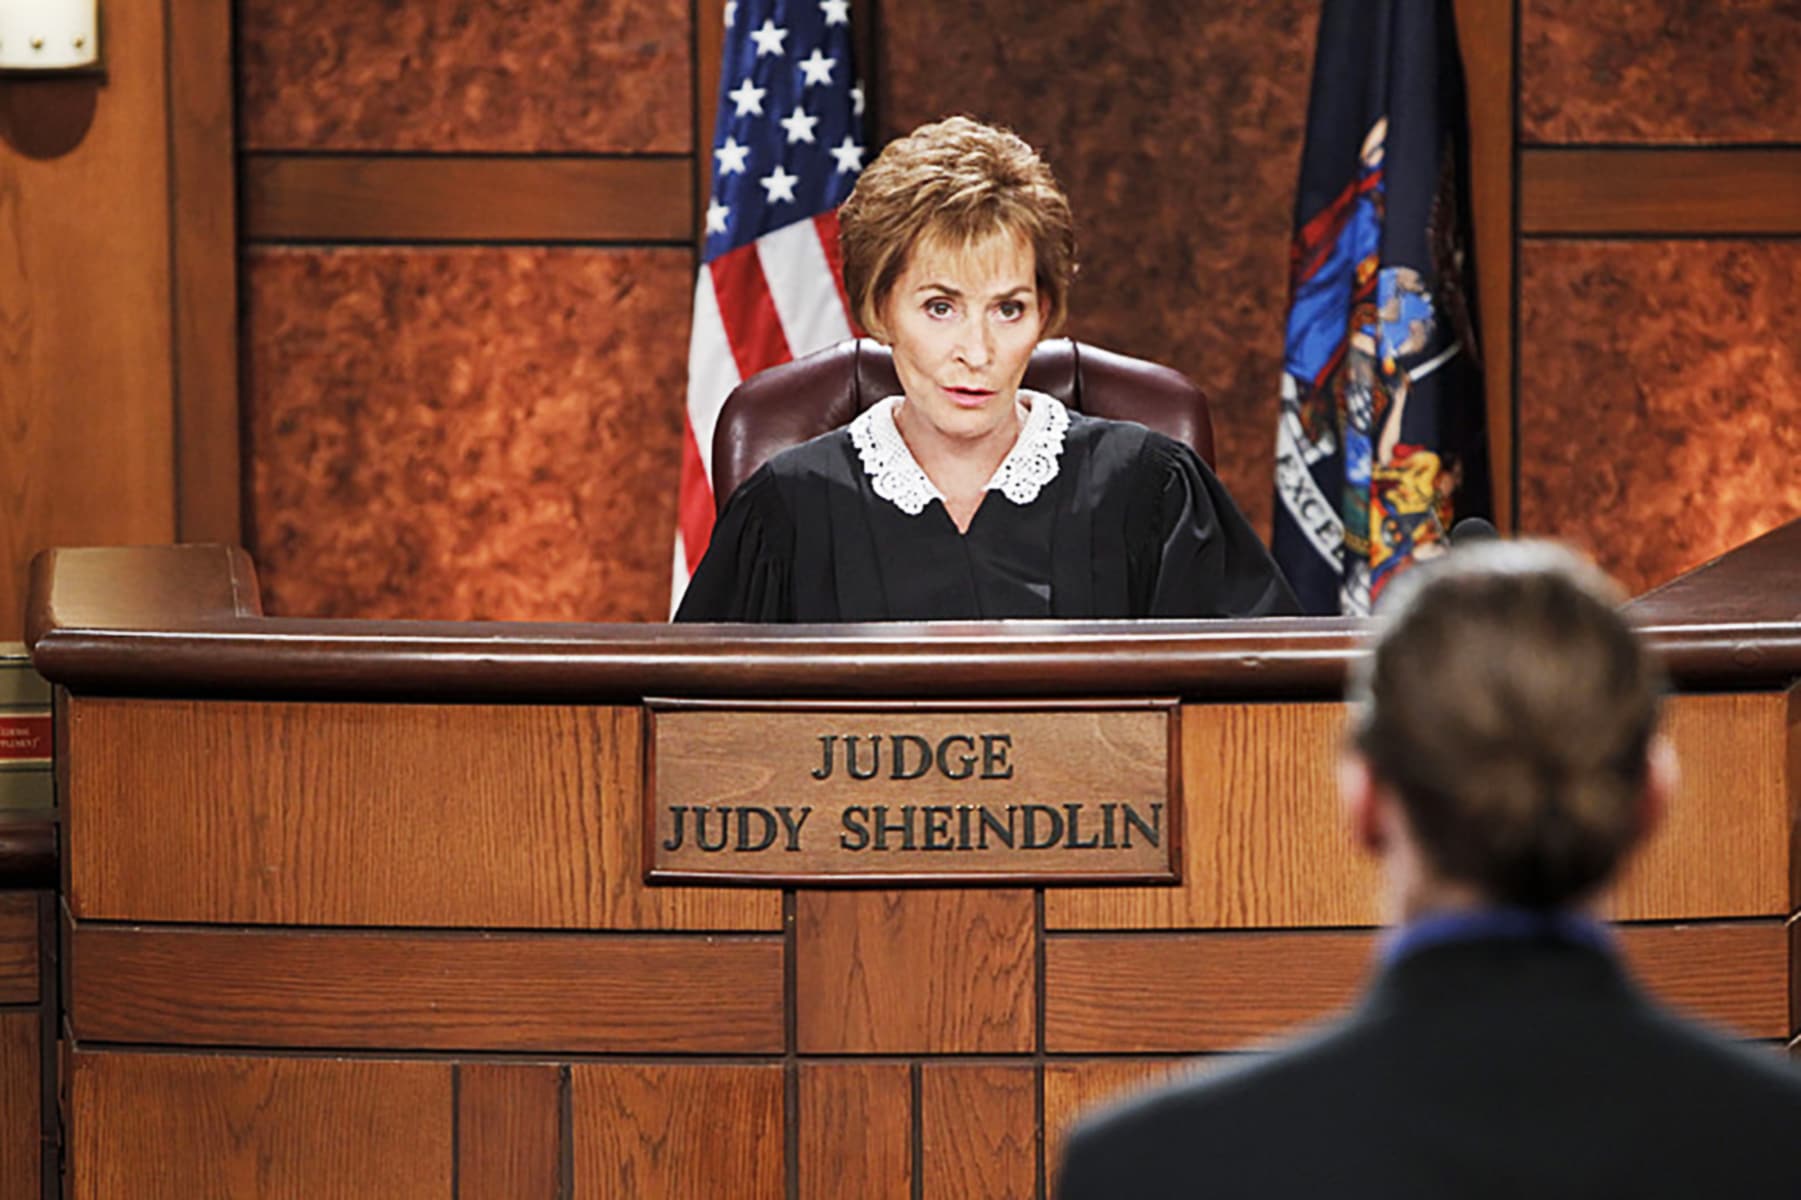 JUDGE JUDY PRIMETIME, Judge Judy Sheindlin